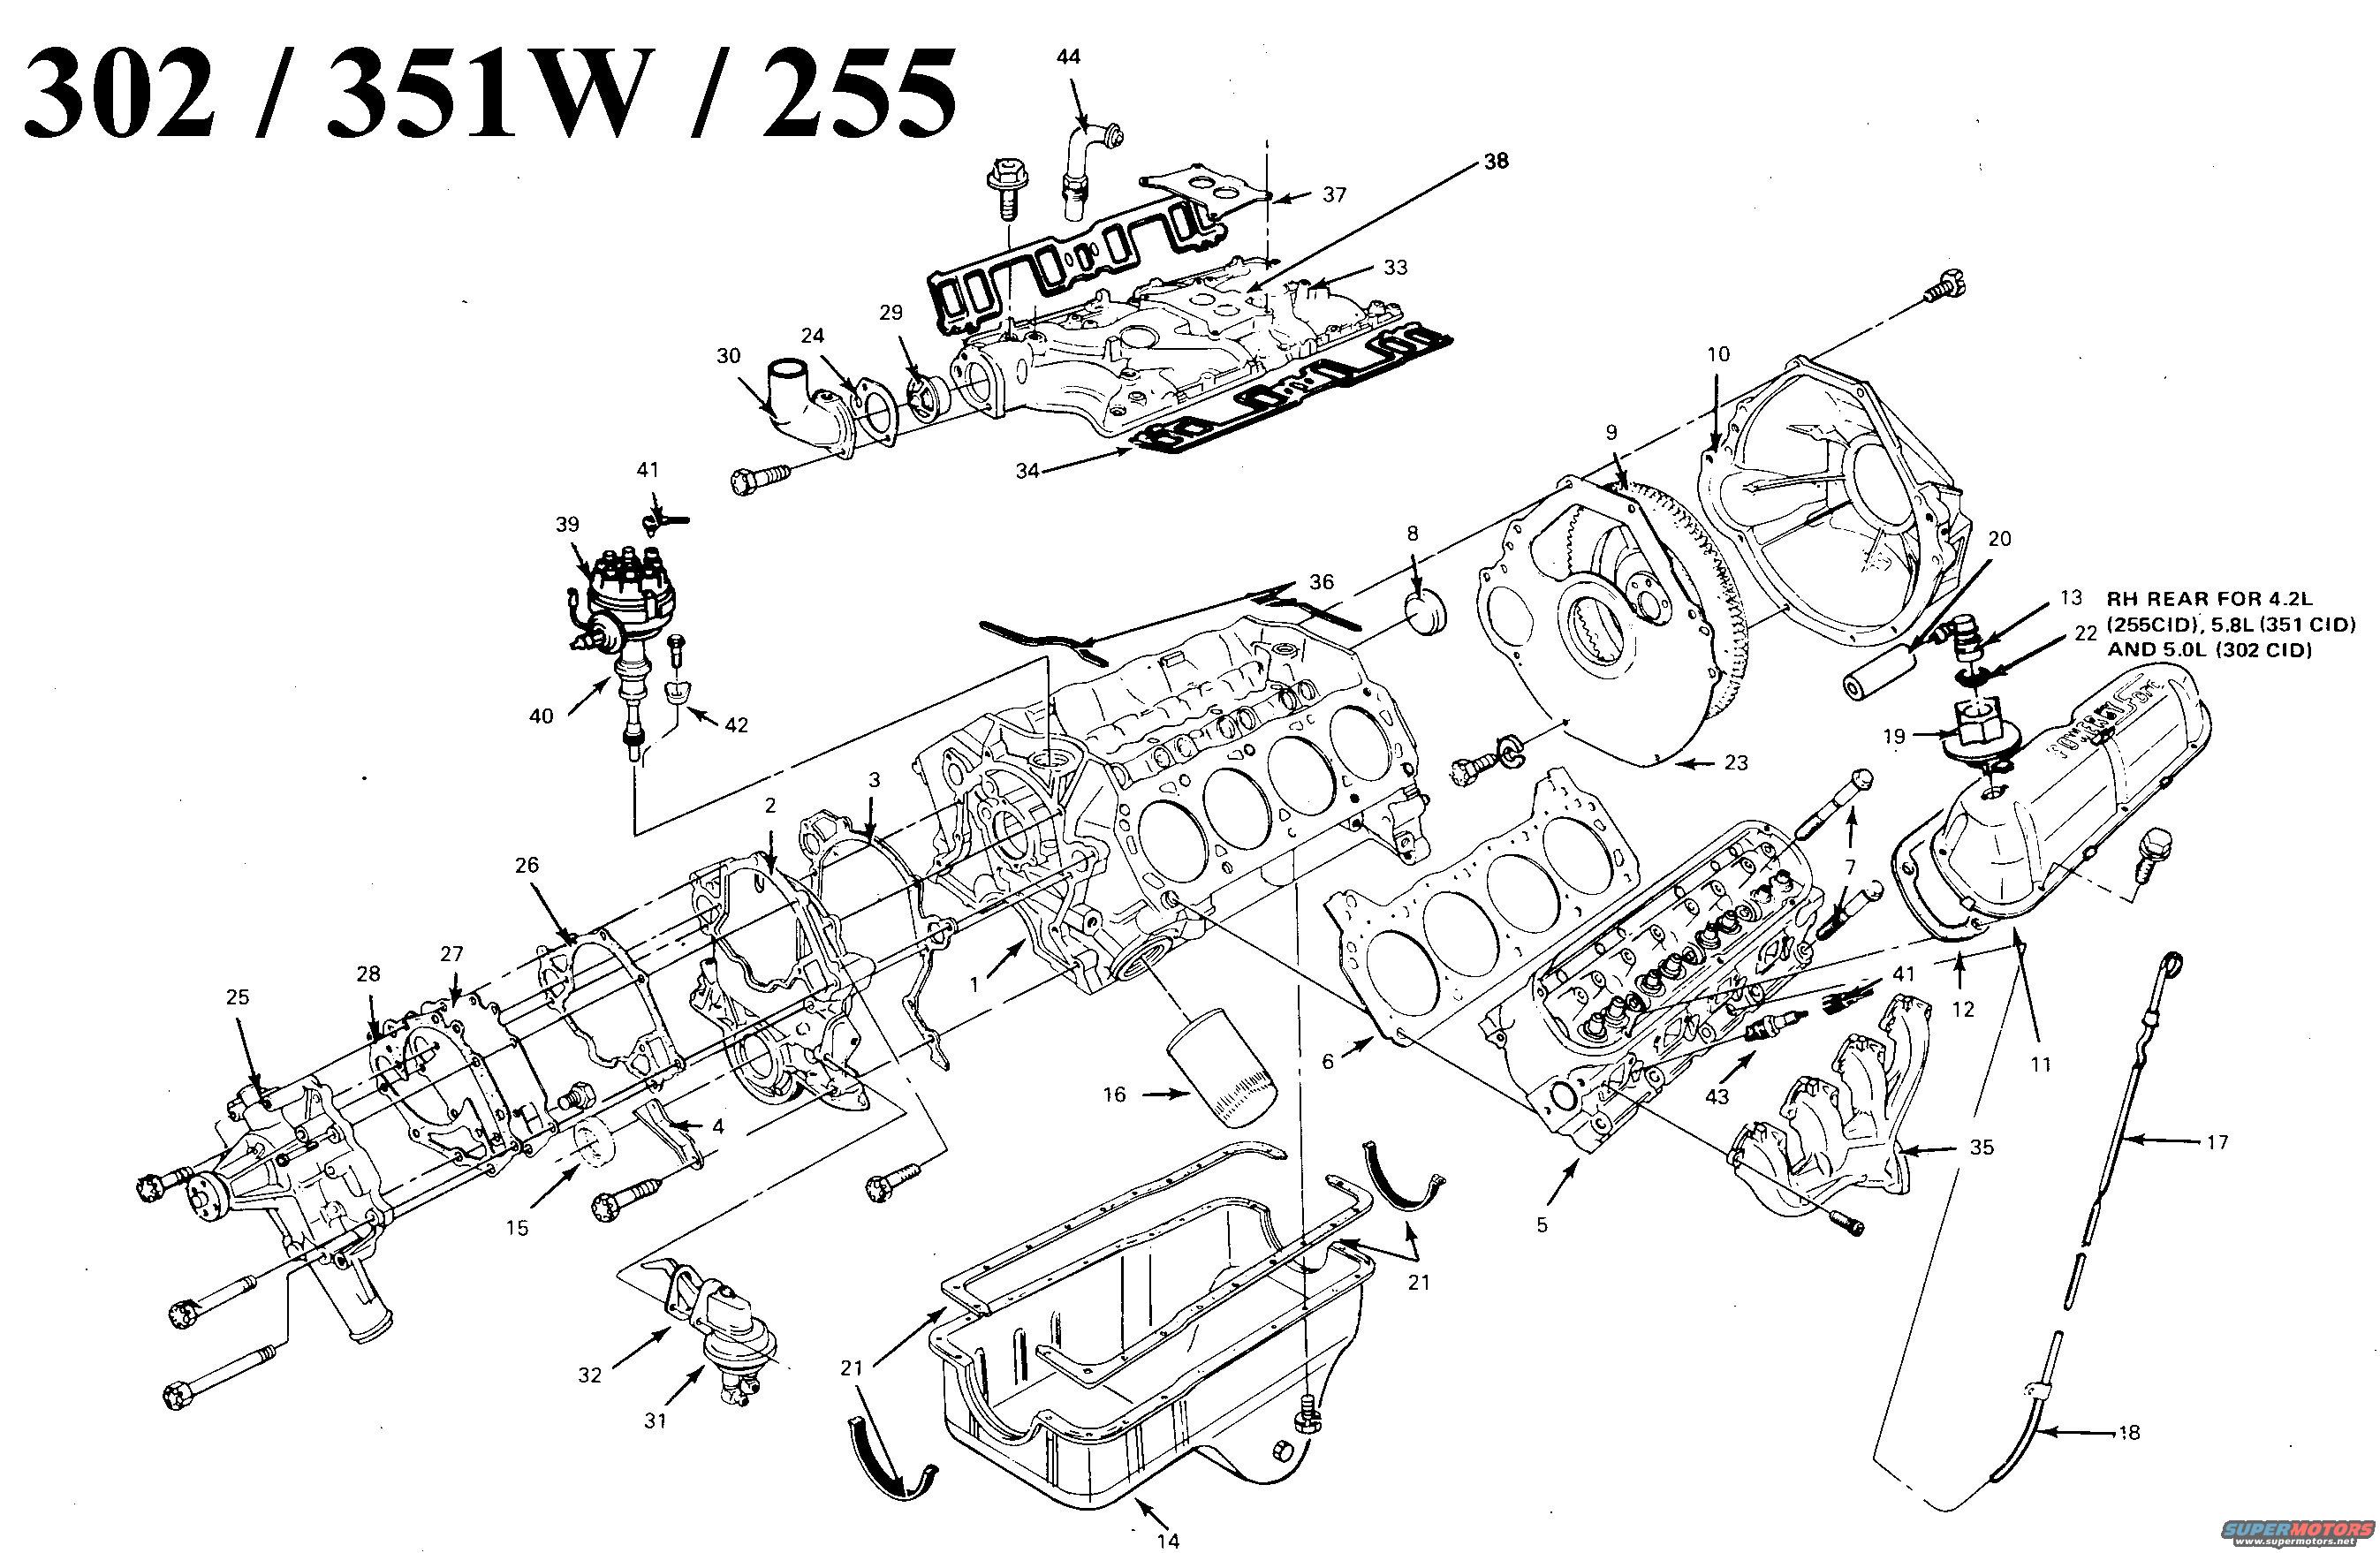 Honda 750 cc engine diagrams exploded views #7